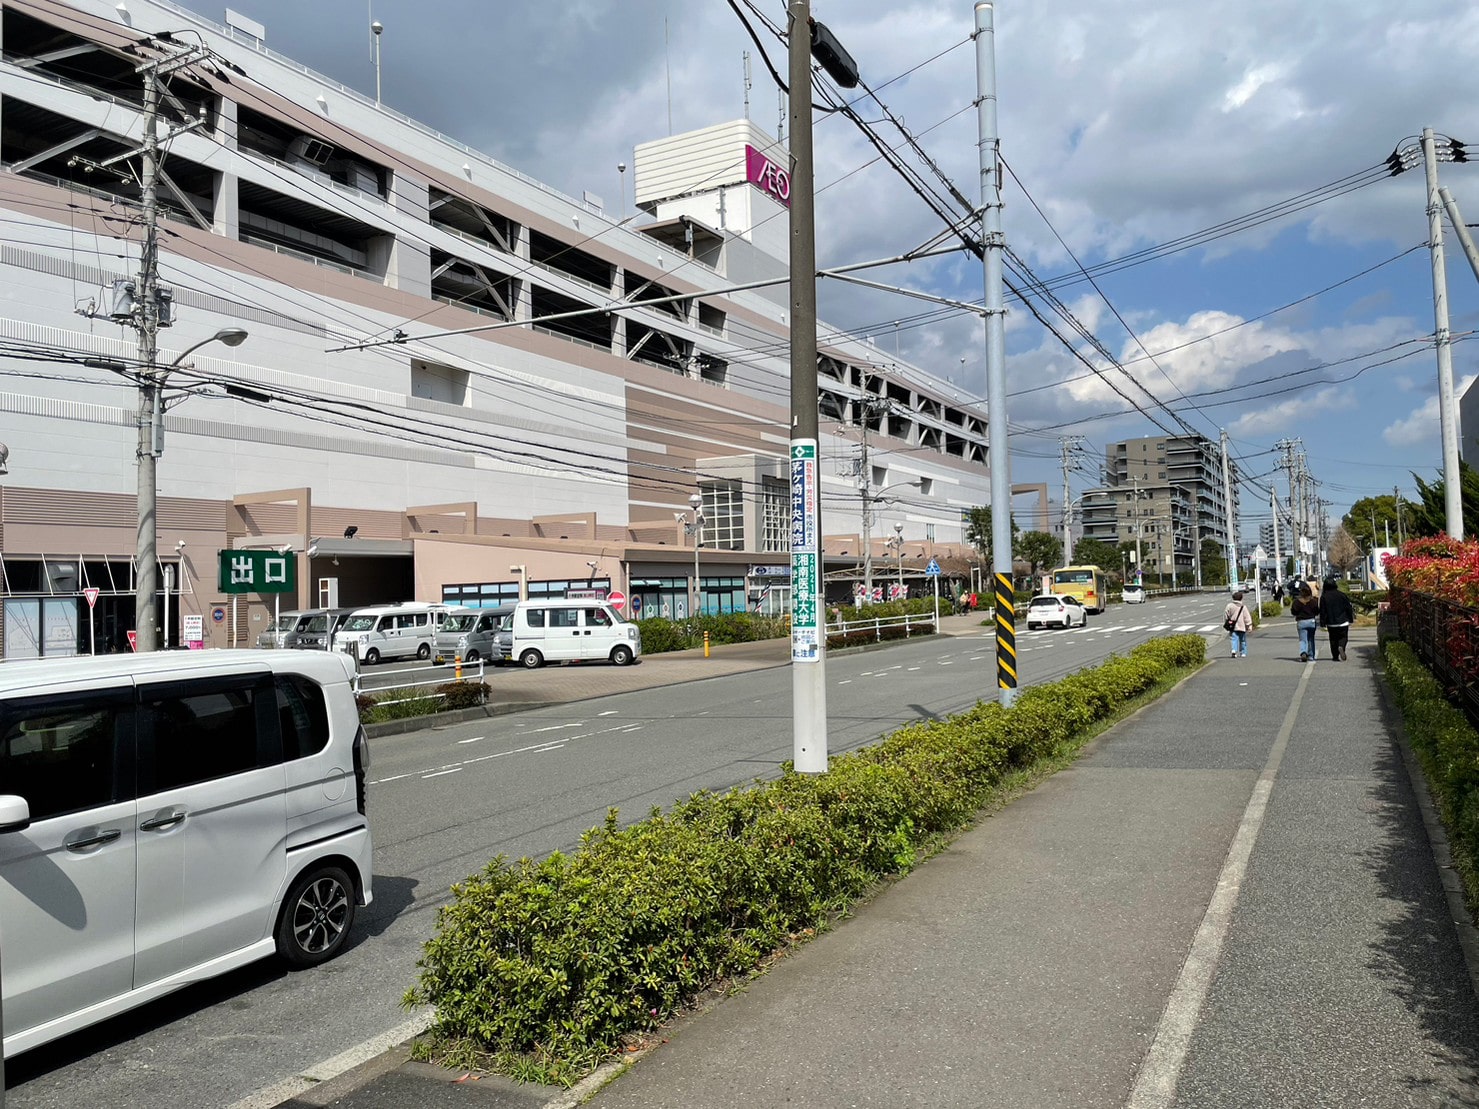 Apple GYM（アップルジム）イオン茅ヶ崎中央店までの道のり（バス）1-4 左へ進み横断歩道を渡ってください。